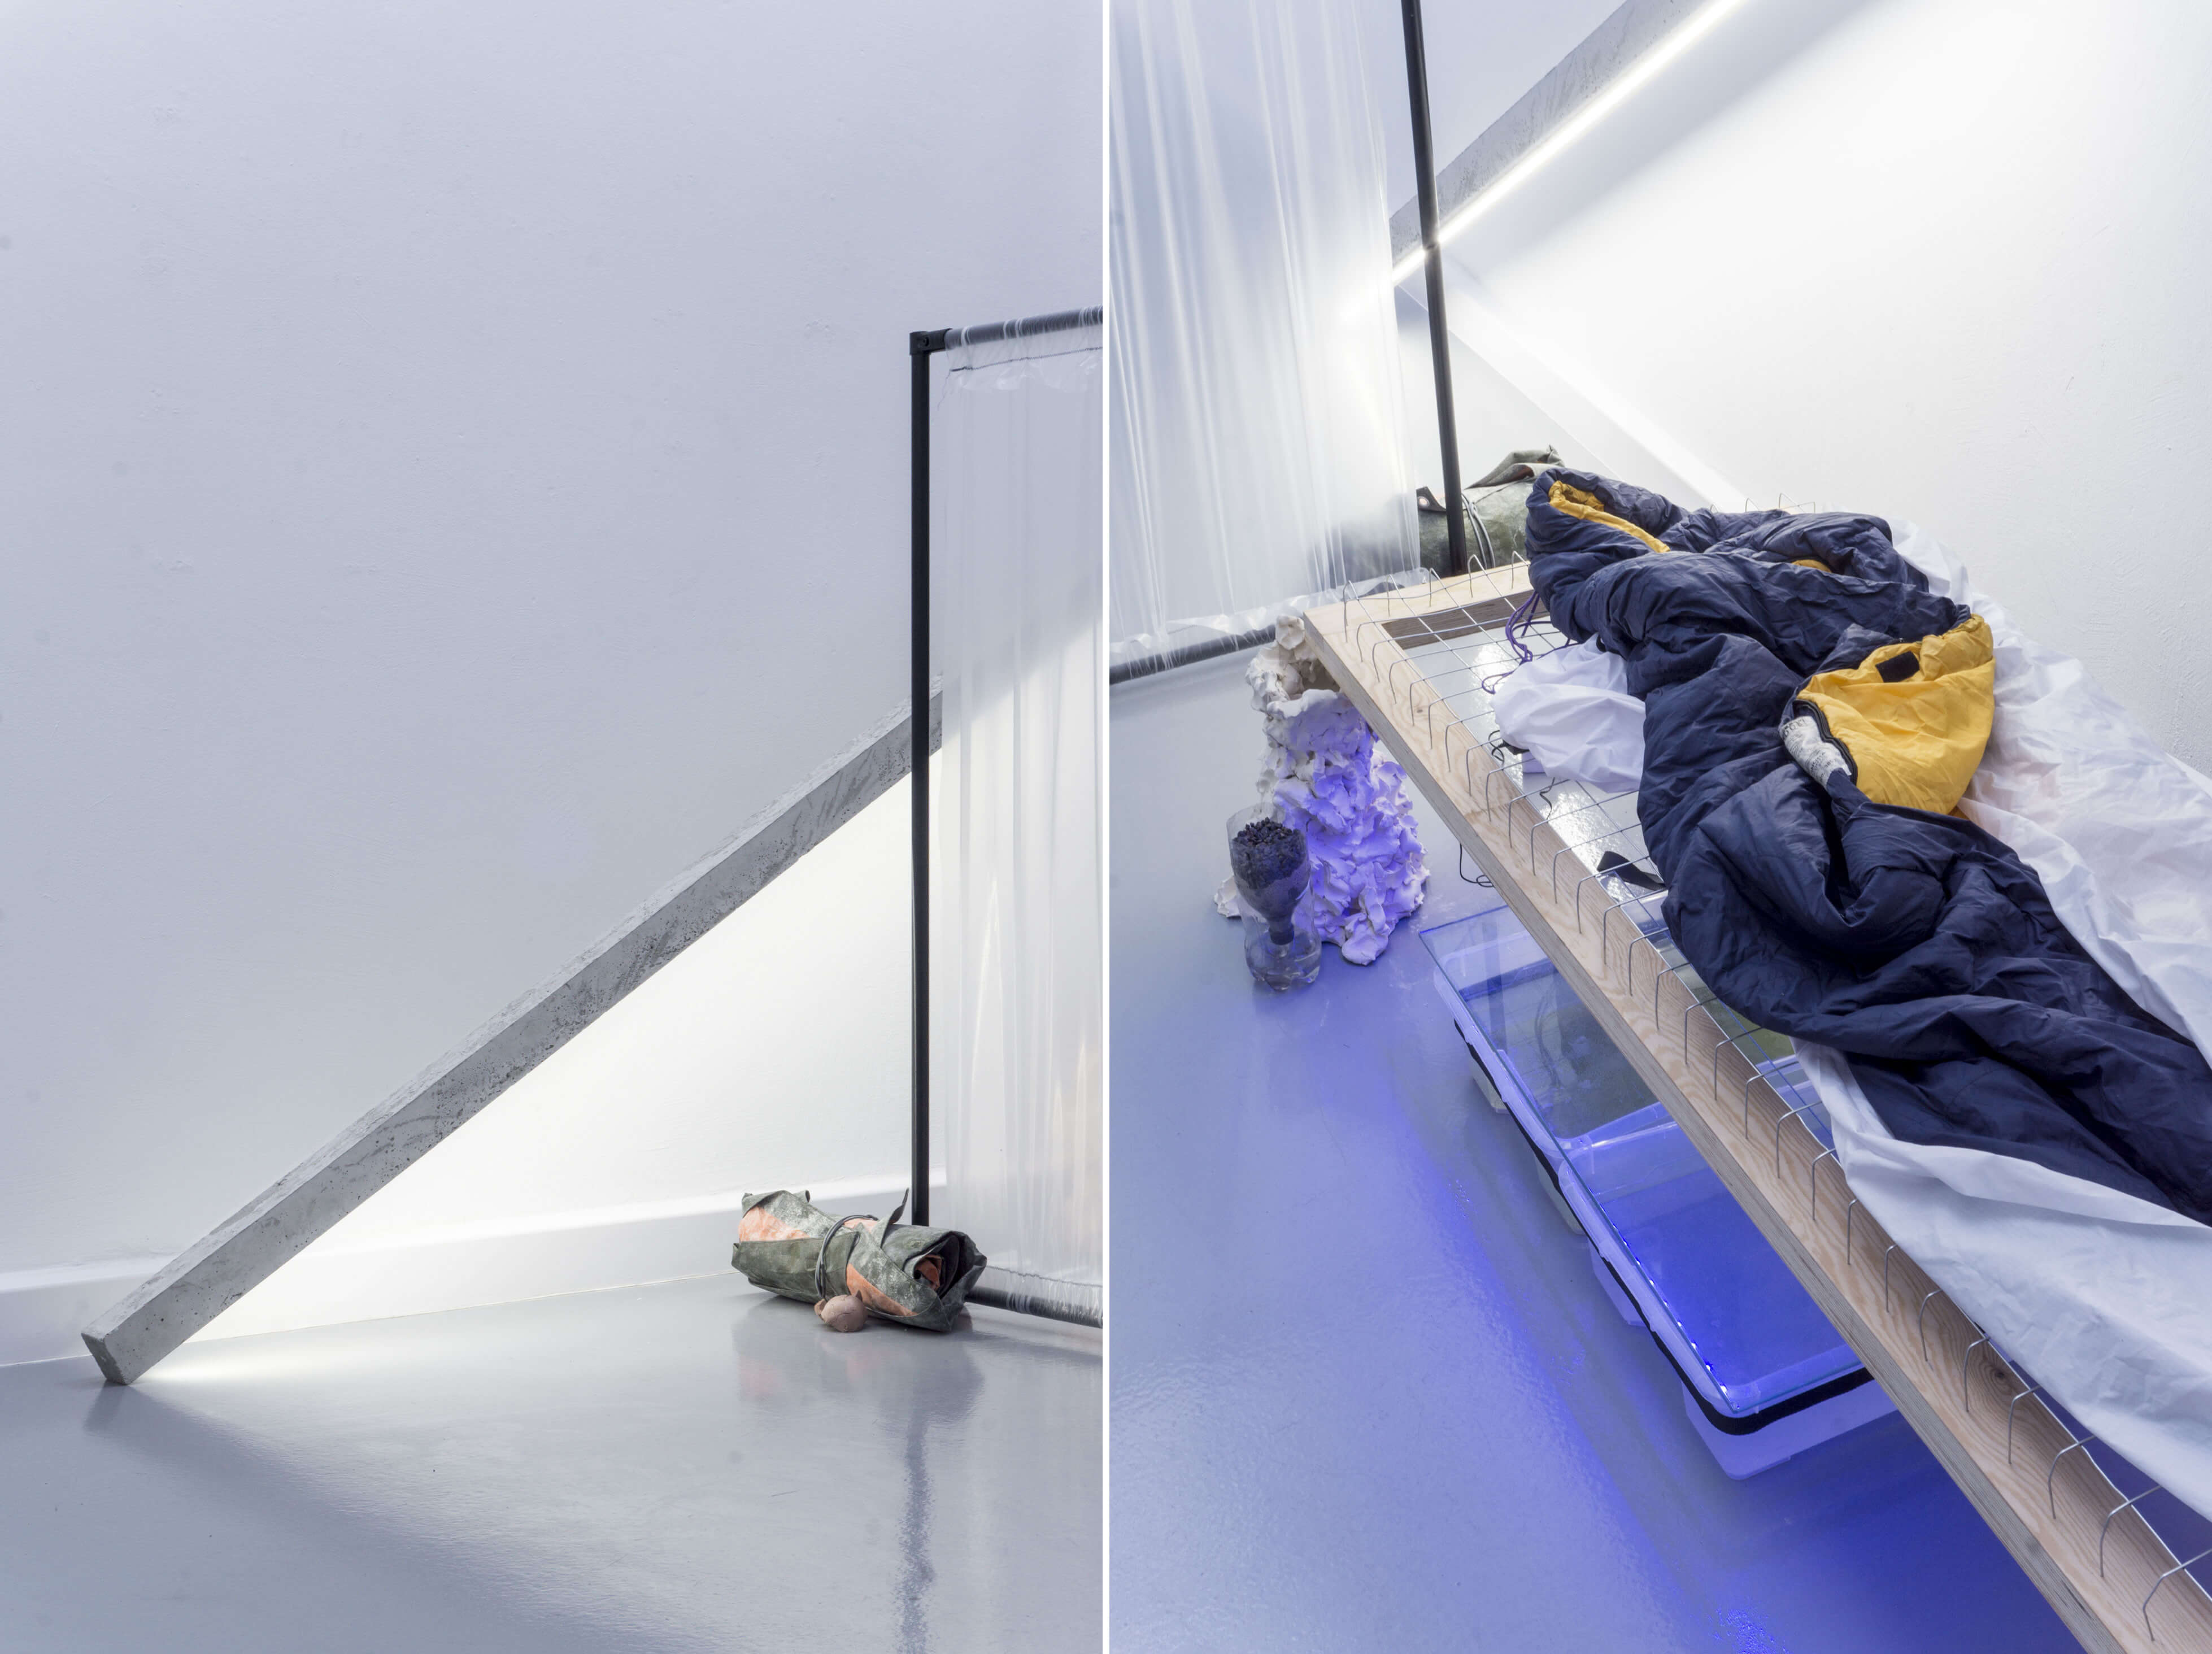 Installationsansichten Alexander Poliček. Links Metall, rechts ein Schlafsack.